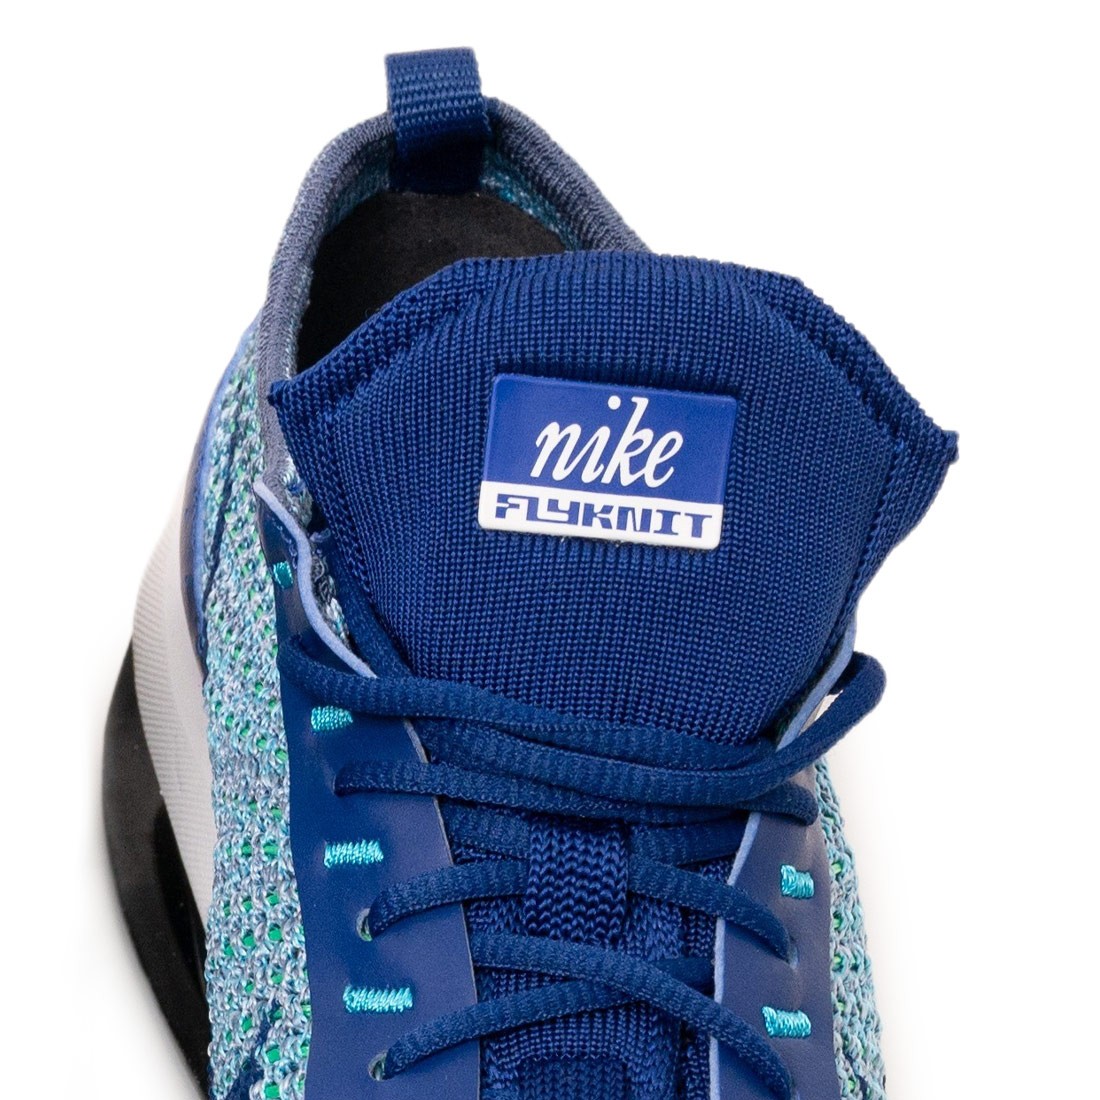 Nike Air Max Flyknit Racer Shoes - Deep Royal Blue / Deep Royal